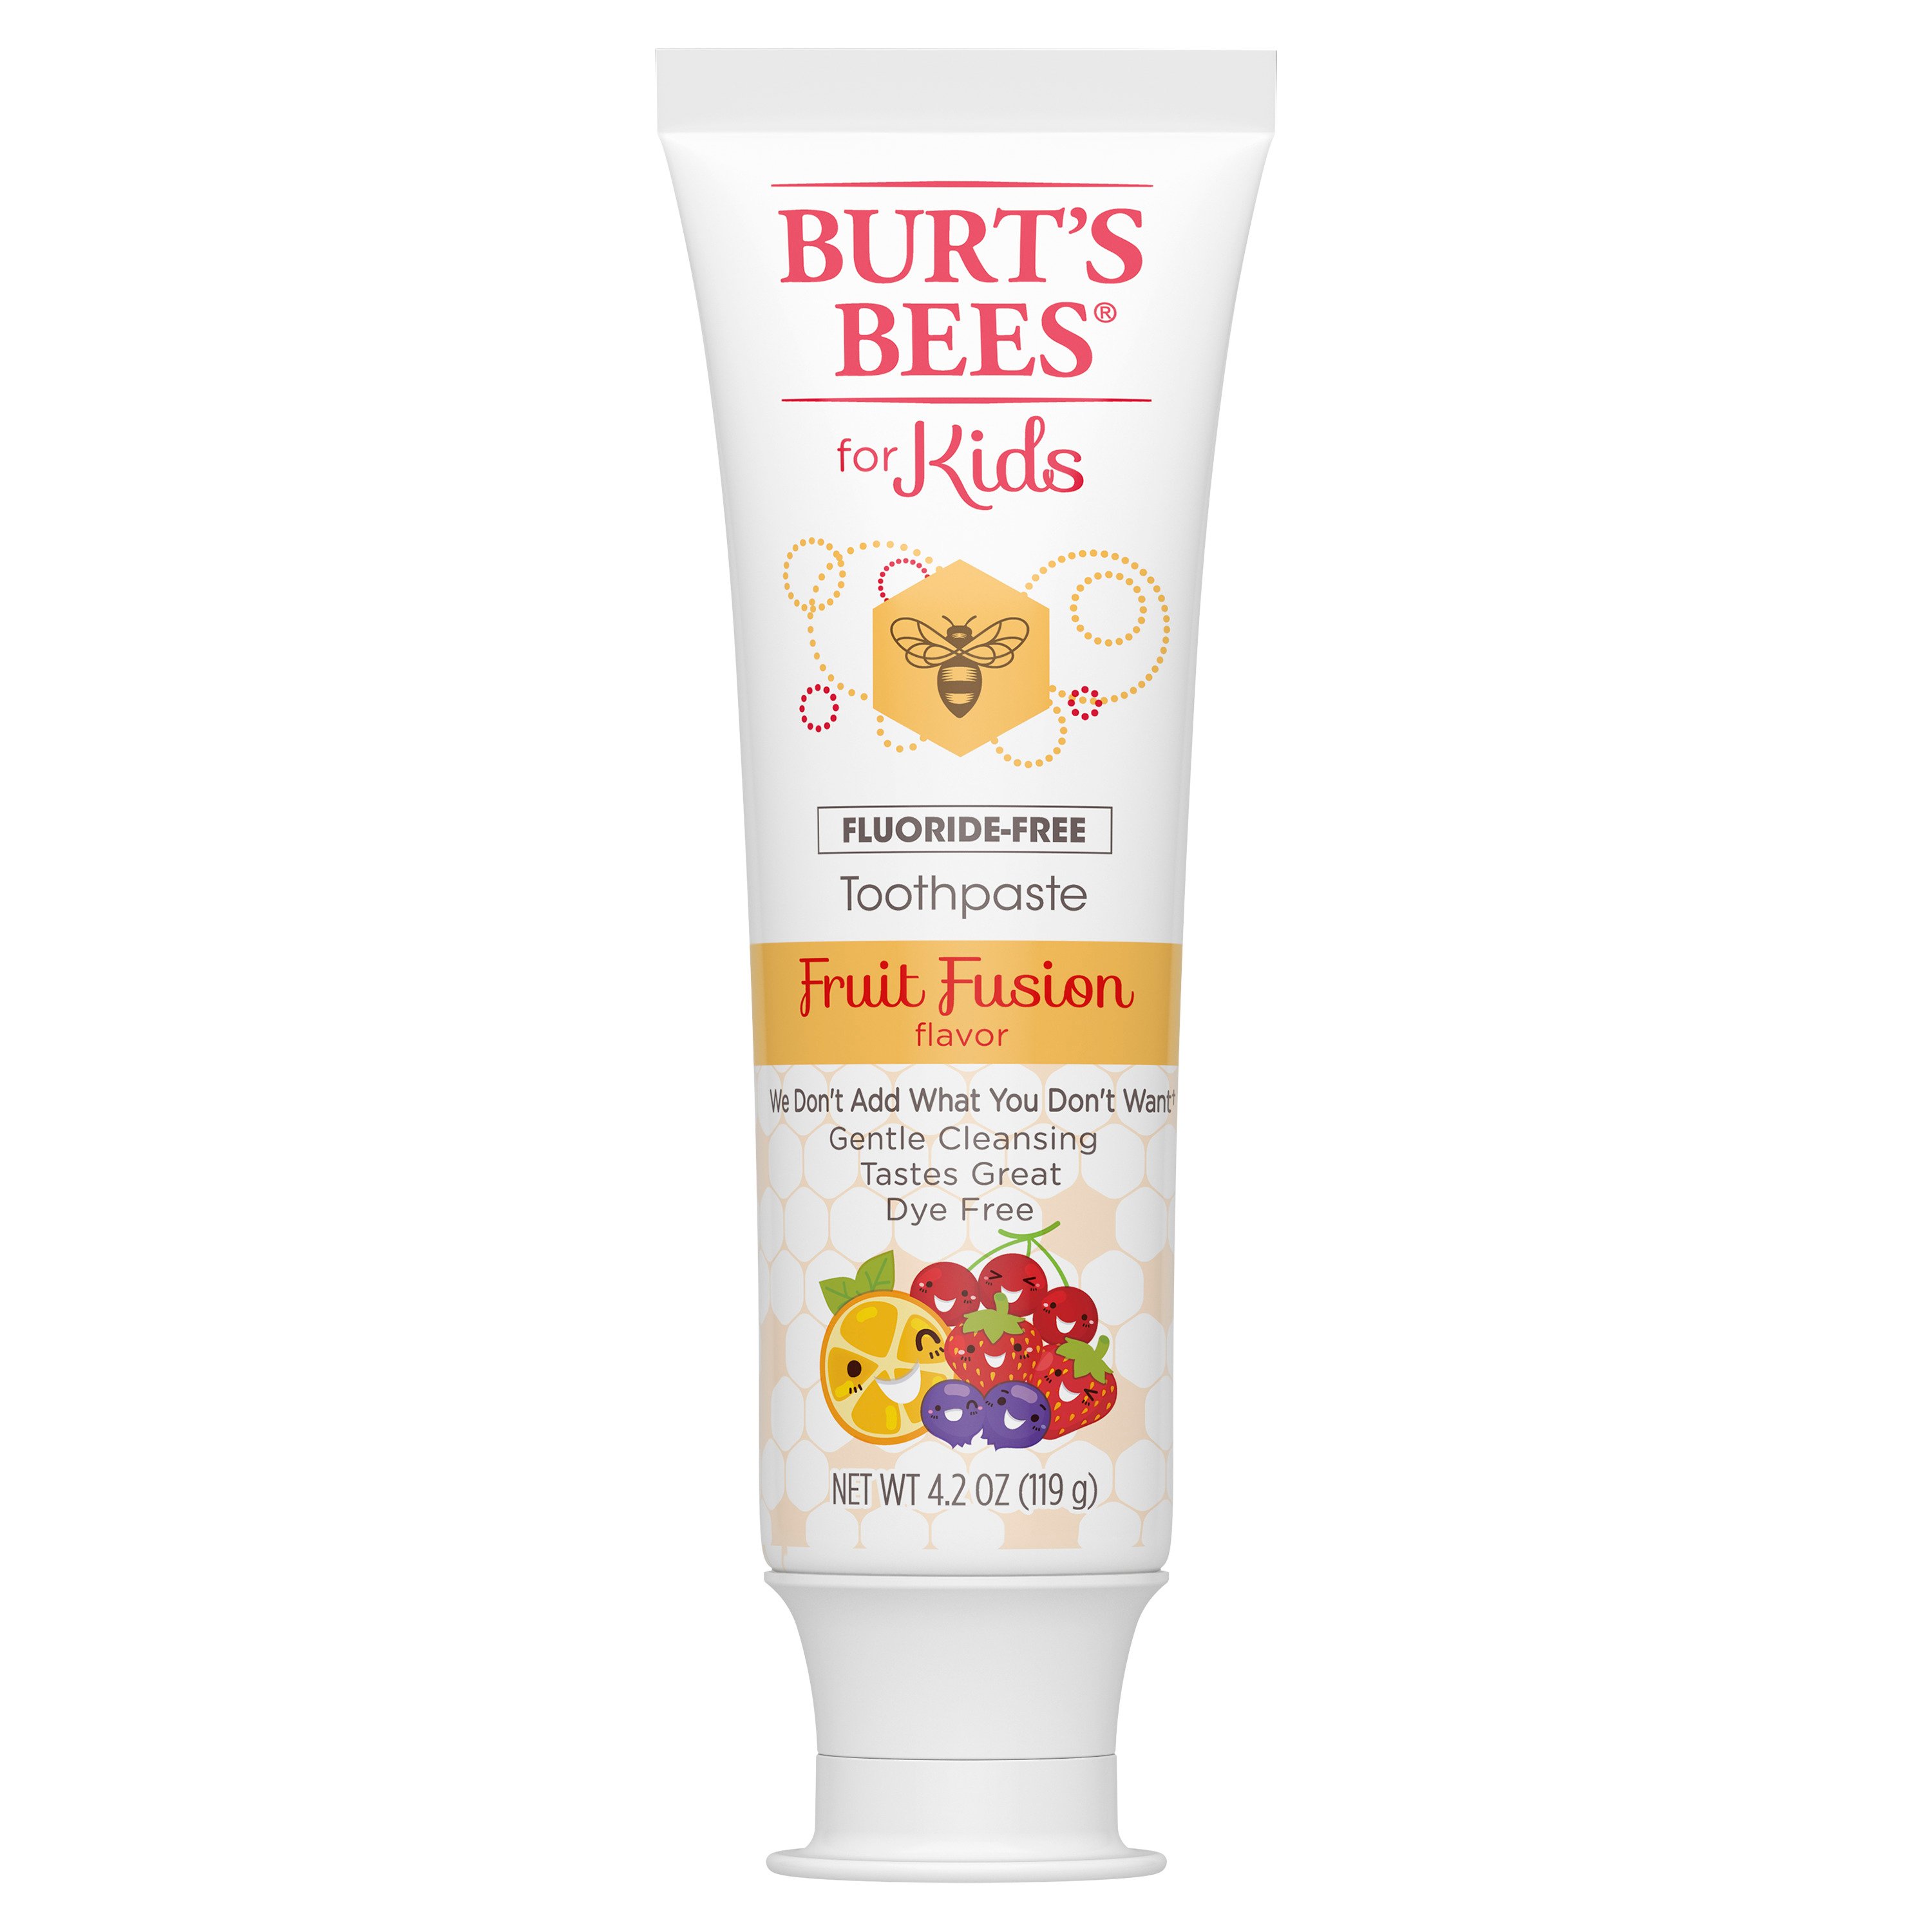 Burt's Bees Kids Fluoride Free Fruit Fusion Toothpaste - Shop